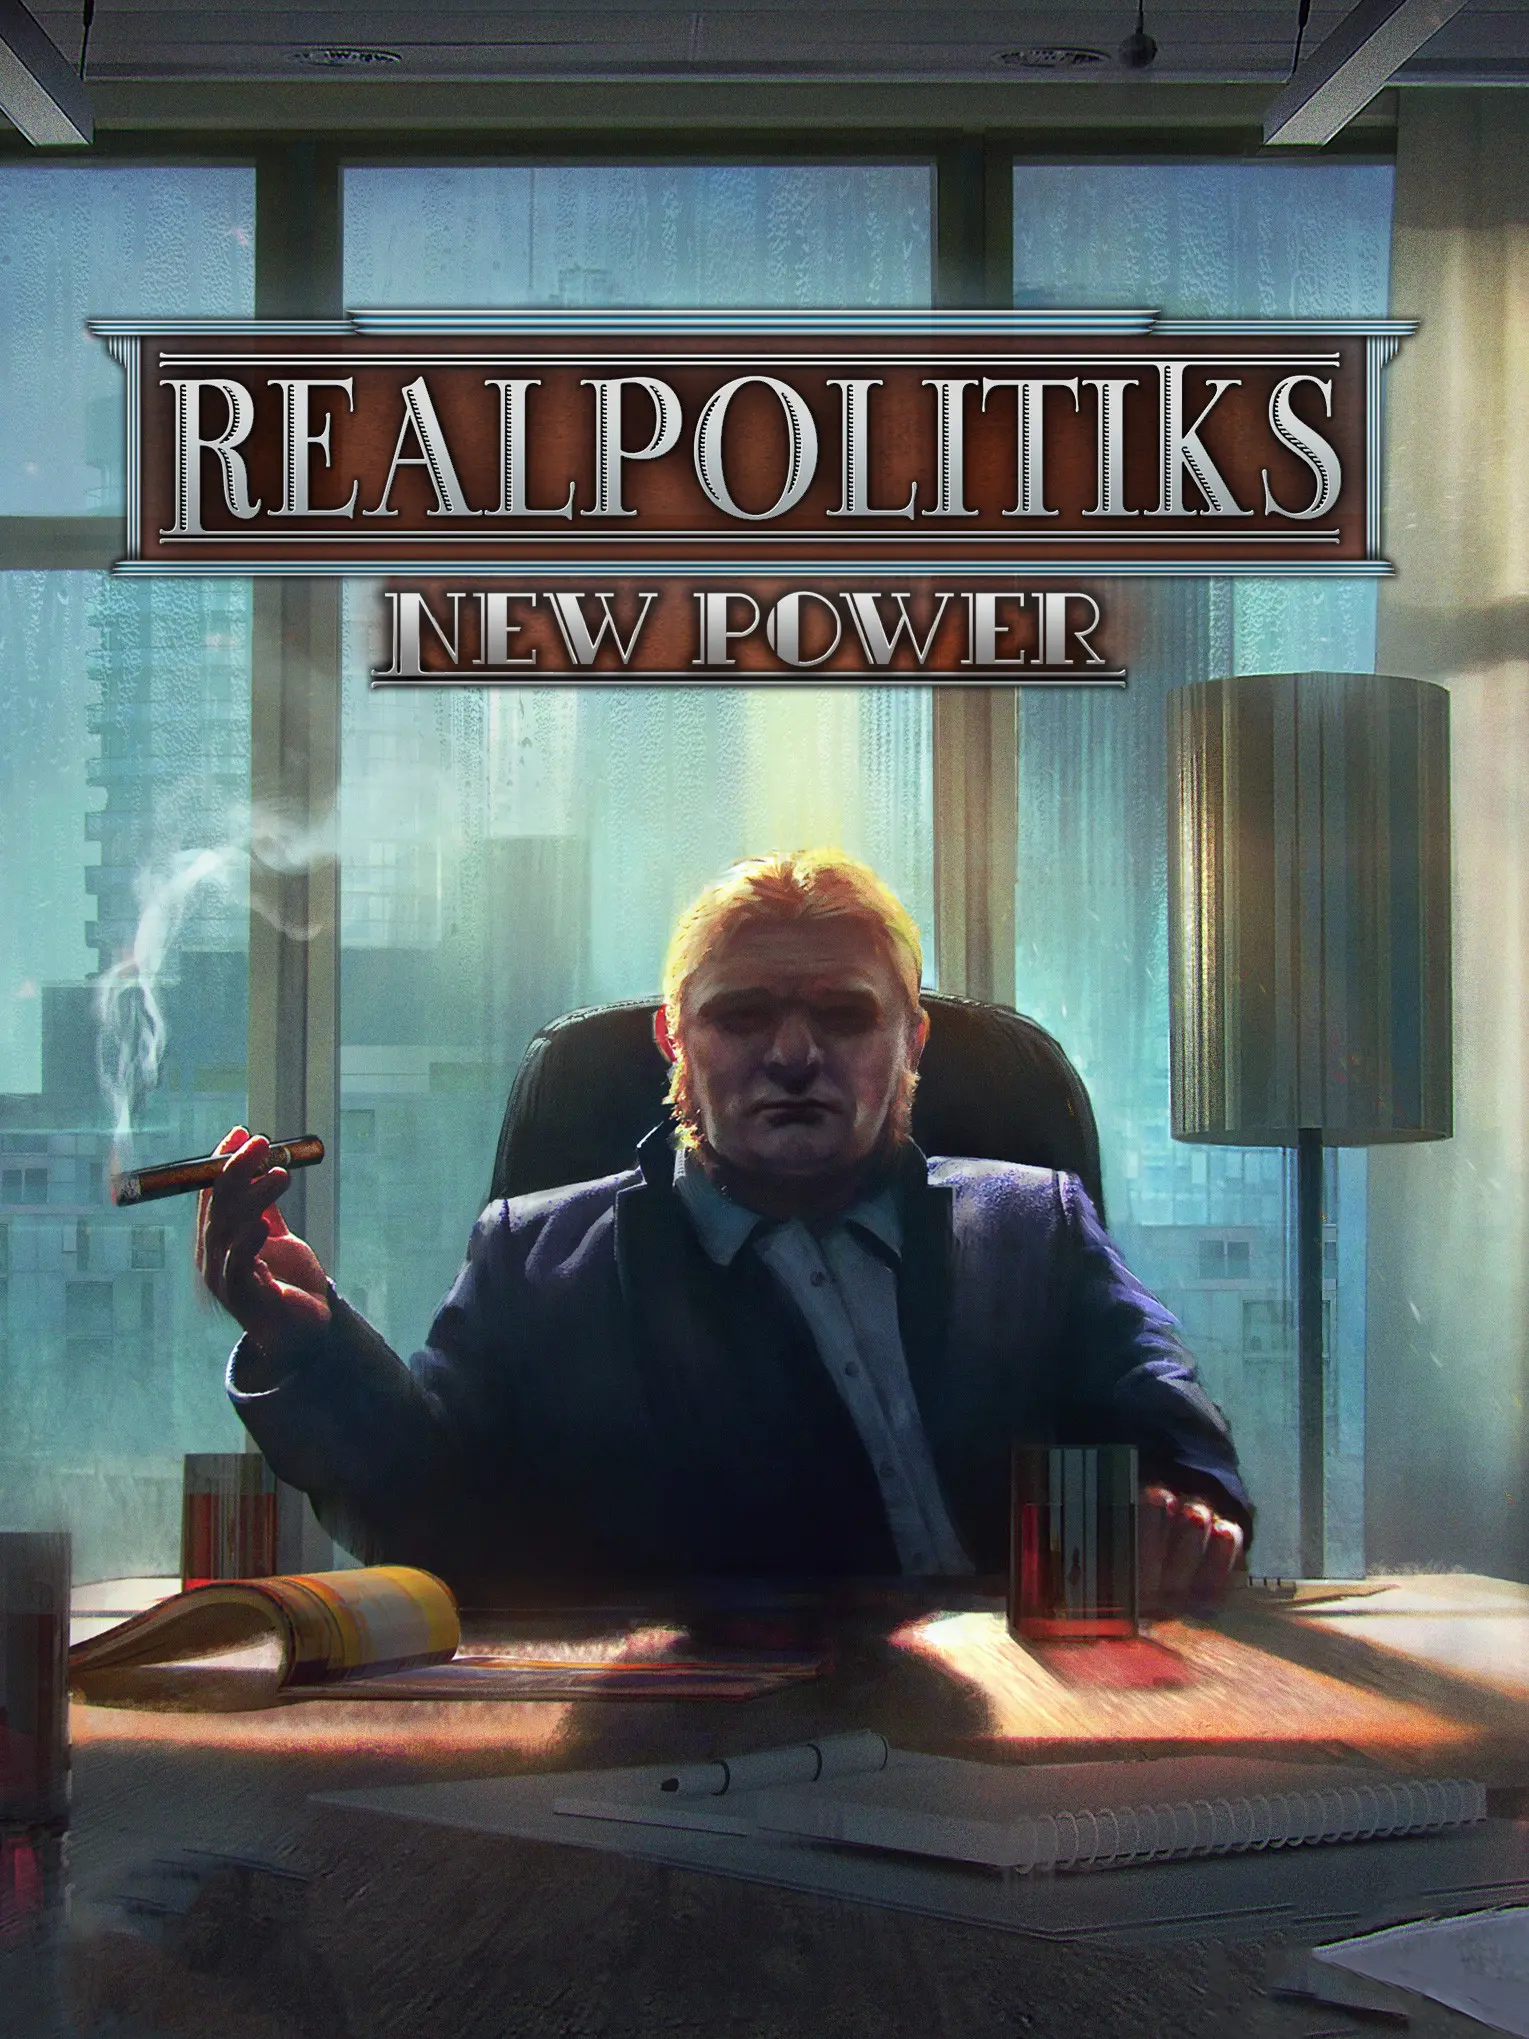 Realpolitiks - New Power DLC (PC / Mac / Linux) -Steam - Digital Code